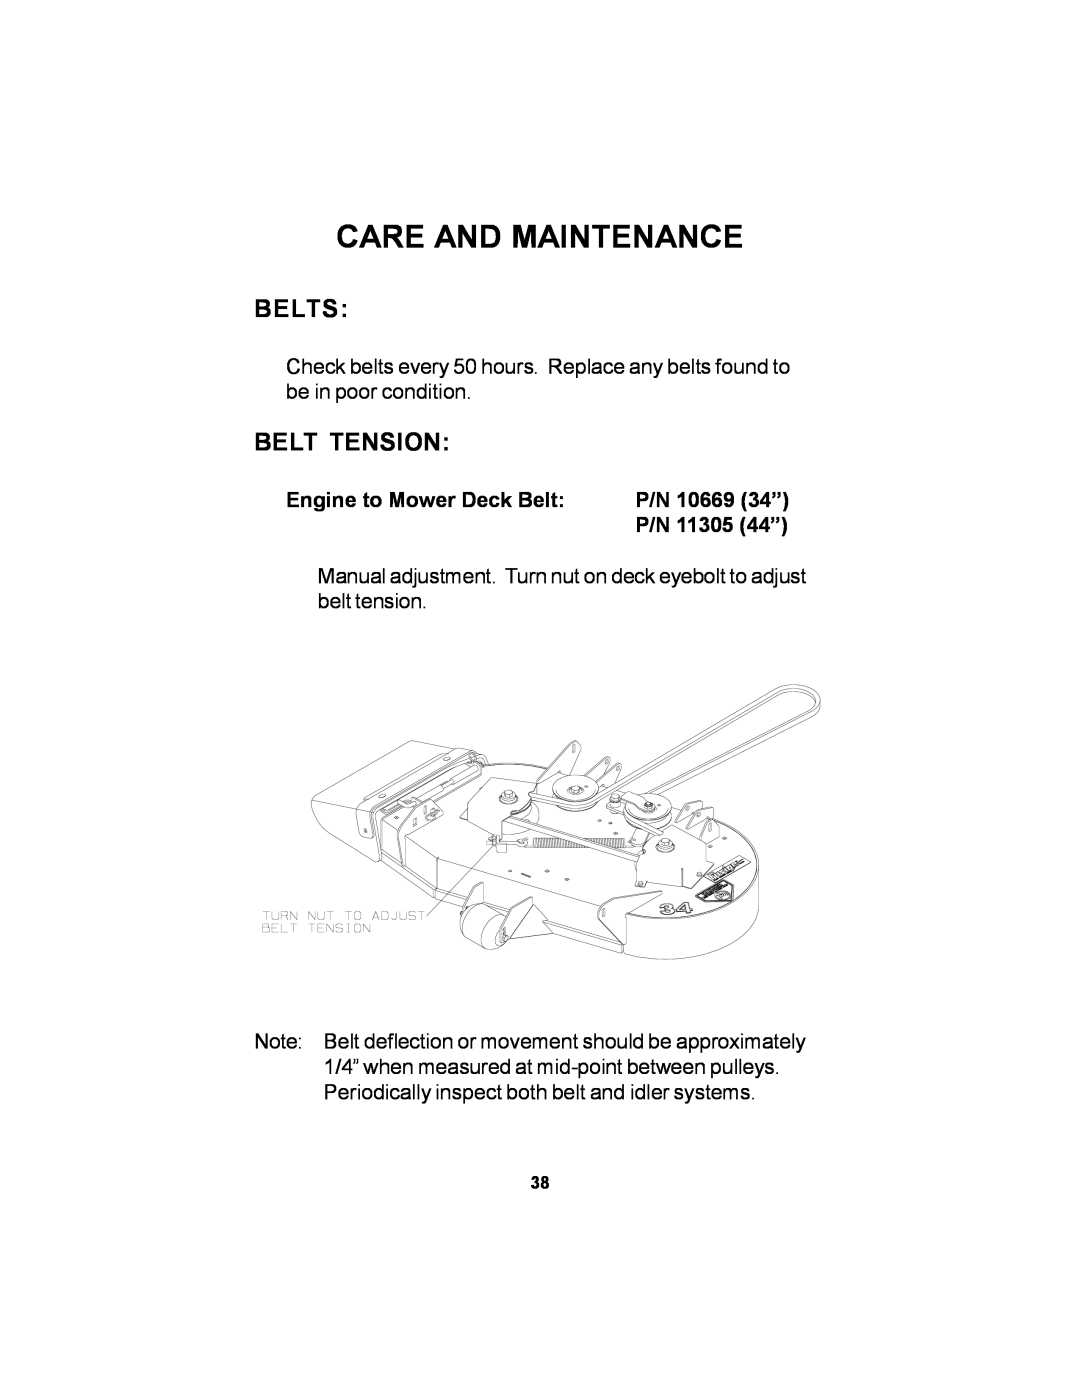 Dixon 11249-106 manual Belts, Belt Tension, Care And Maintenance, Engine to Mower Deck Belt, P/N 10669 34”, P/N 11305 44” 